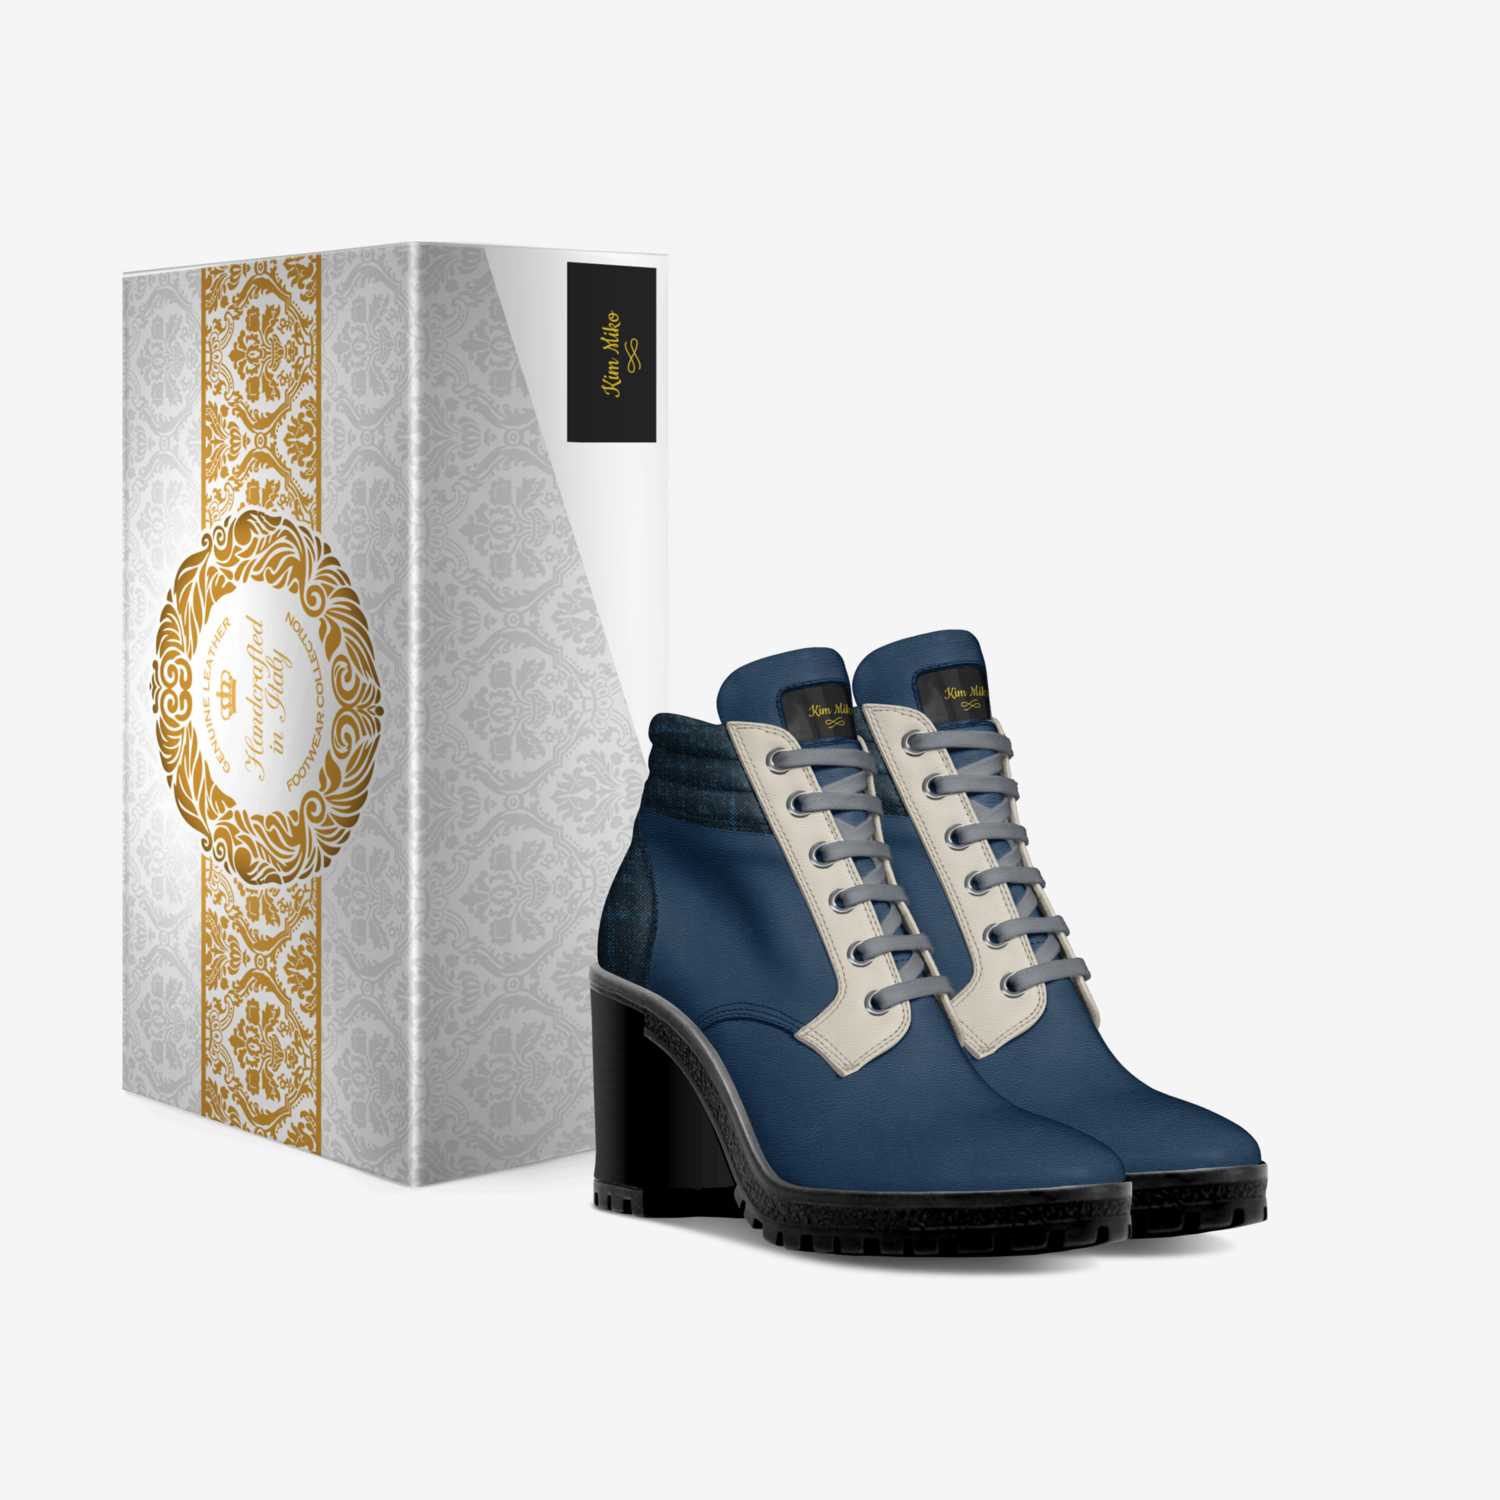 Kim Miko custom made in Italy shoes by JeVena K | Box view